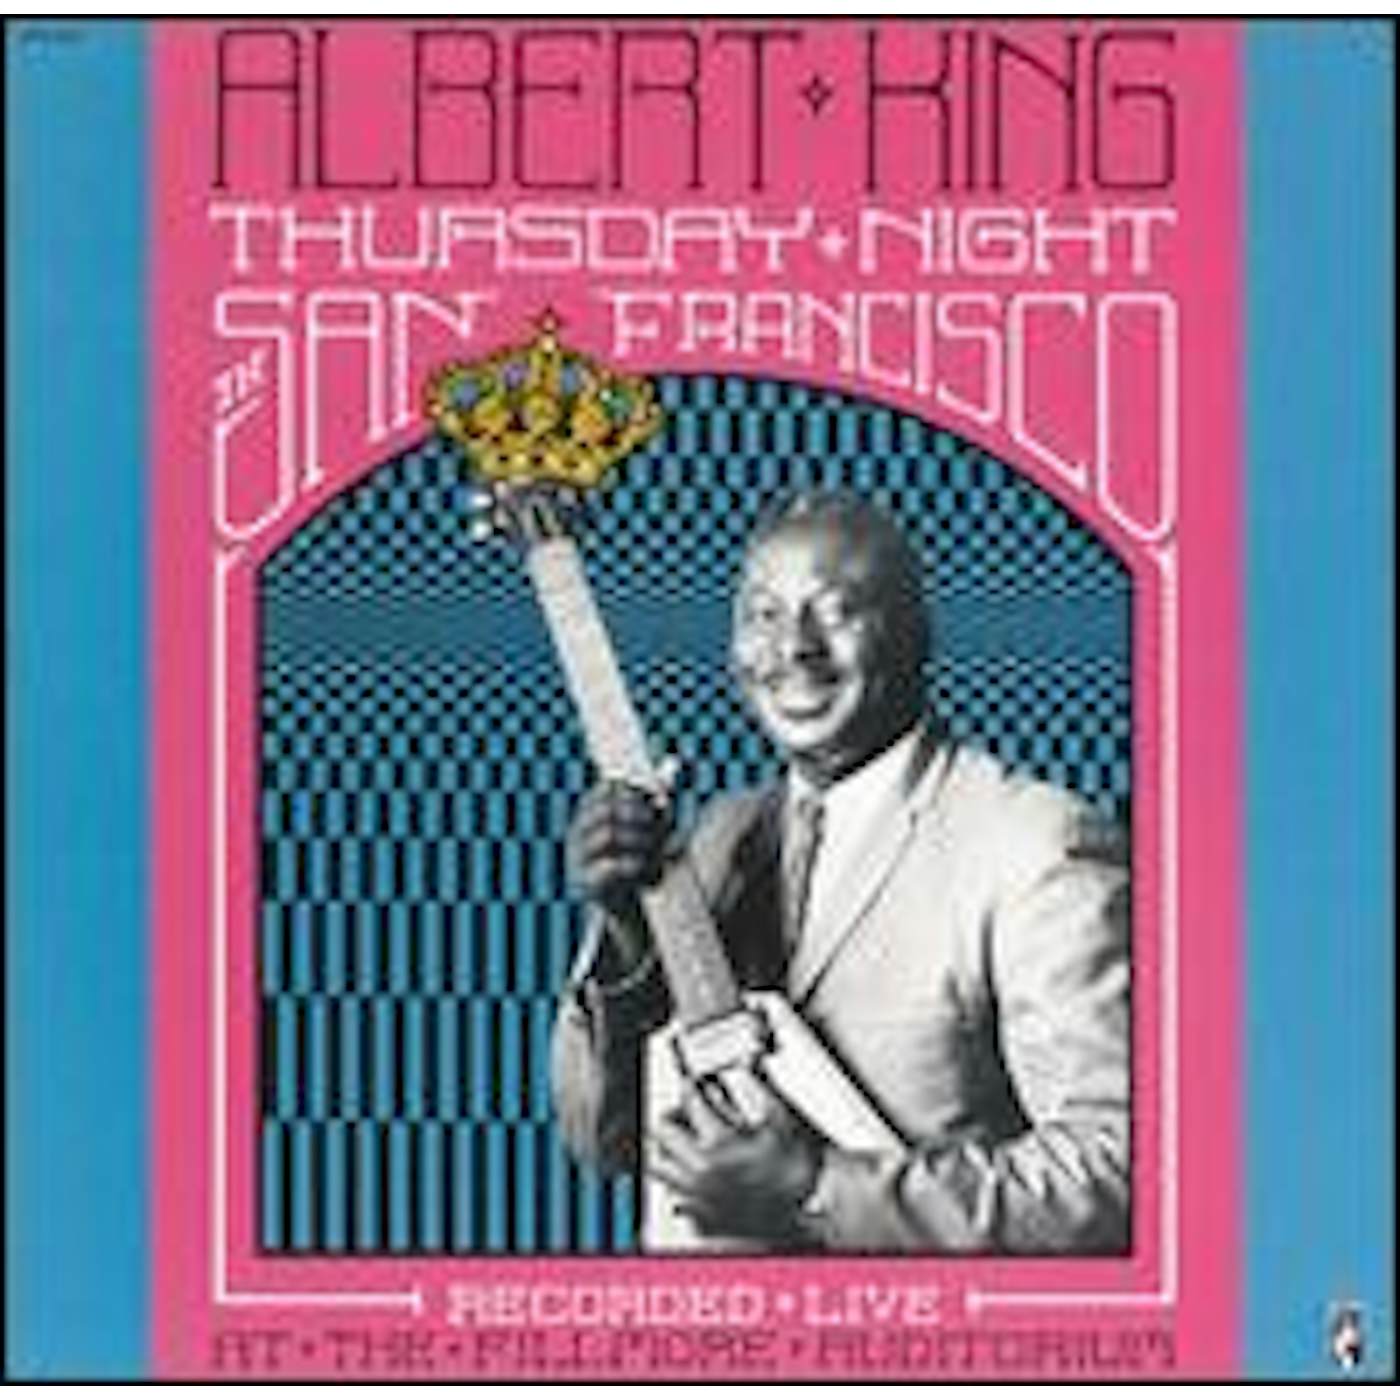 Albert King THURSDAY NIGHT IN SAN FRANCISCO CD